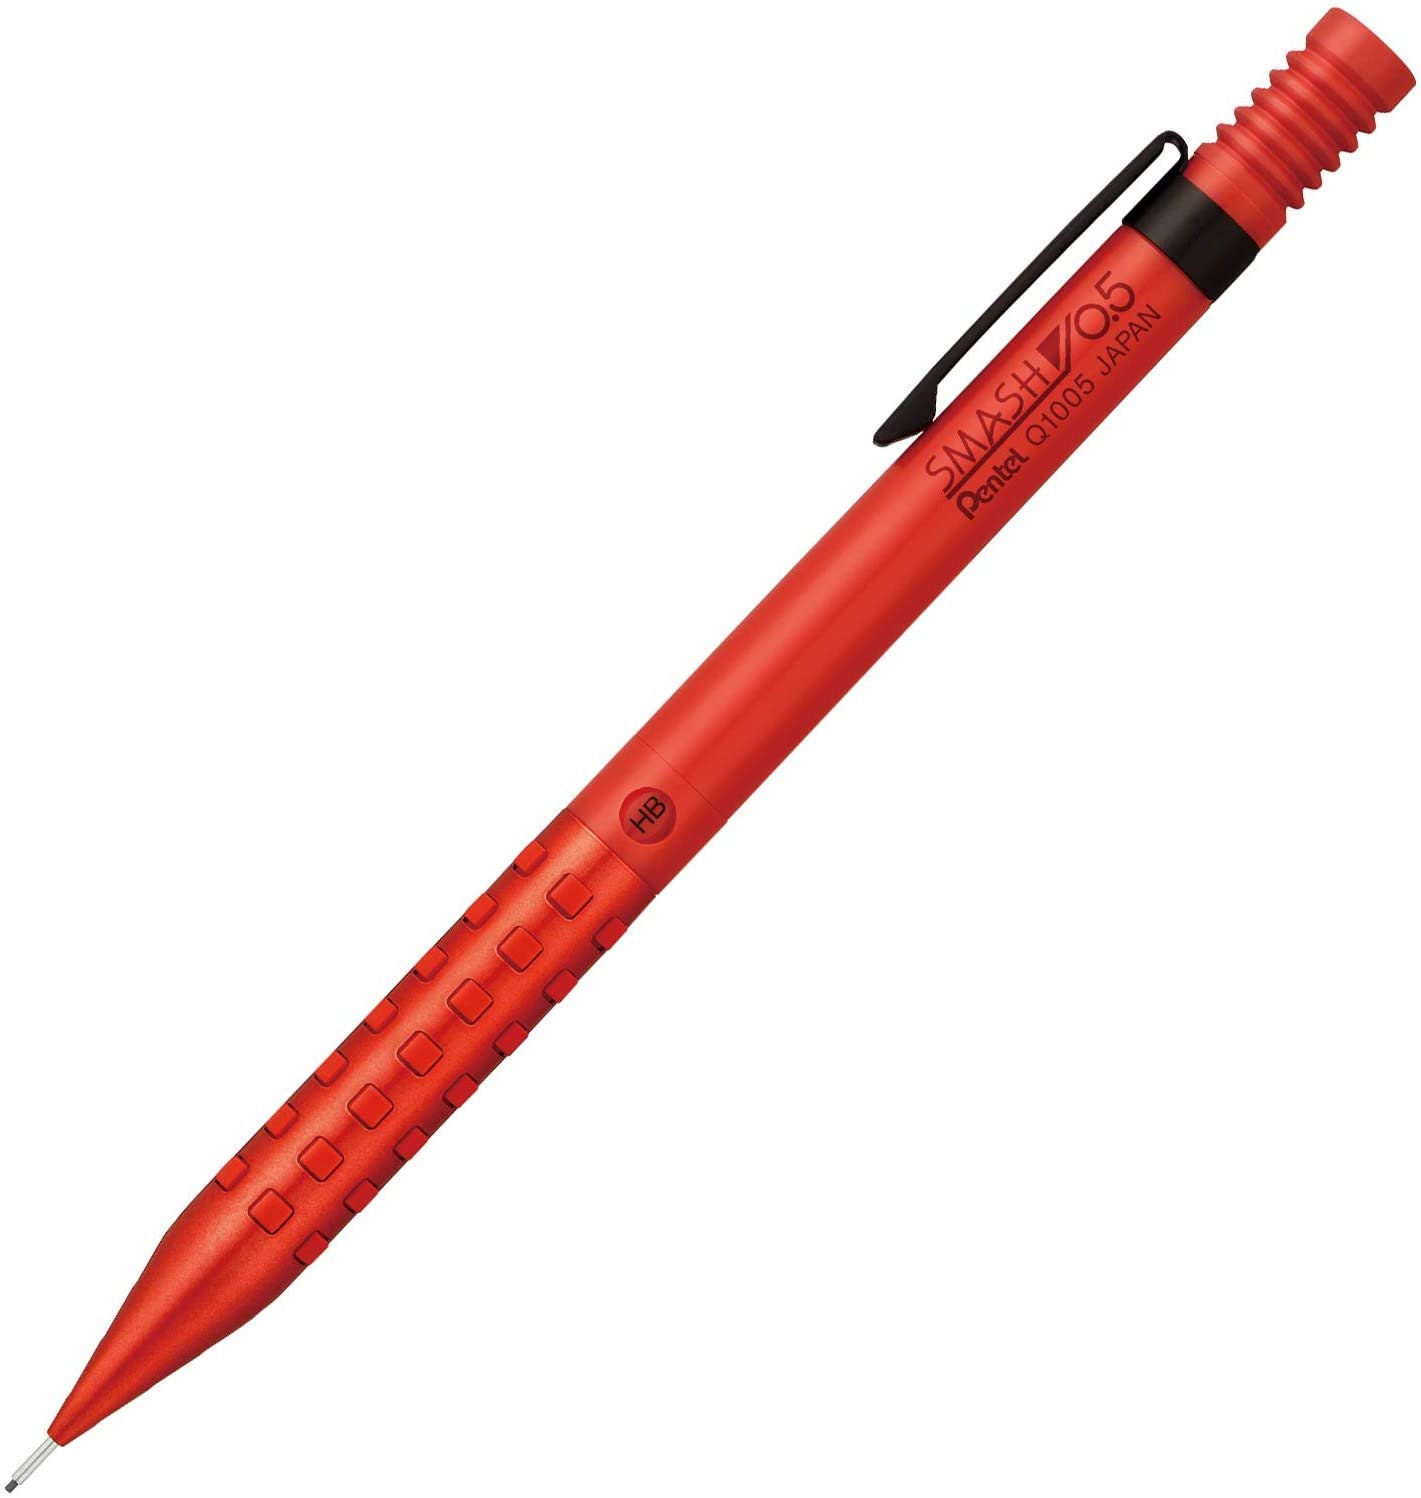 Pentel GraphGear 300 Drafting Pencil - 0.9 mm - Red